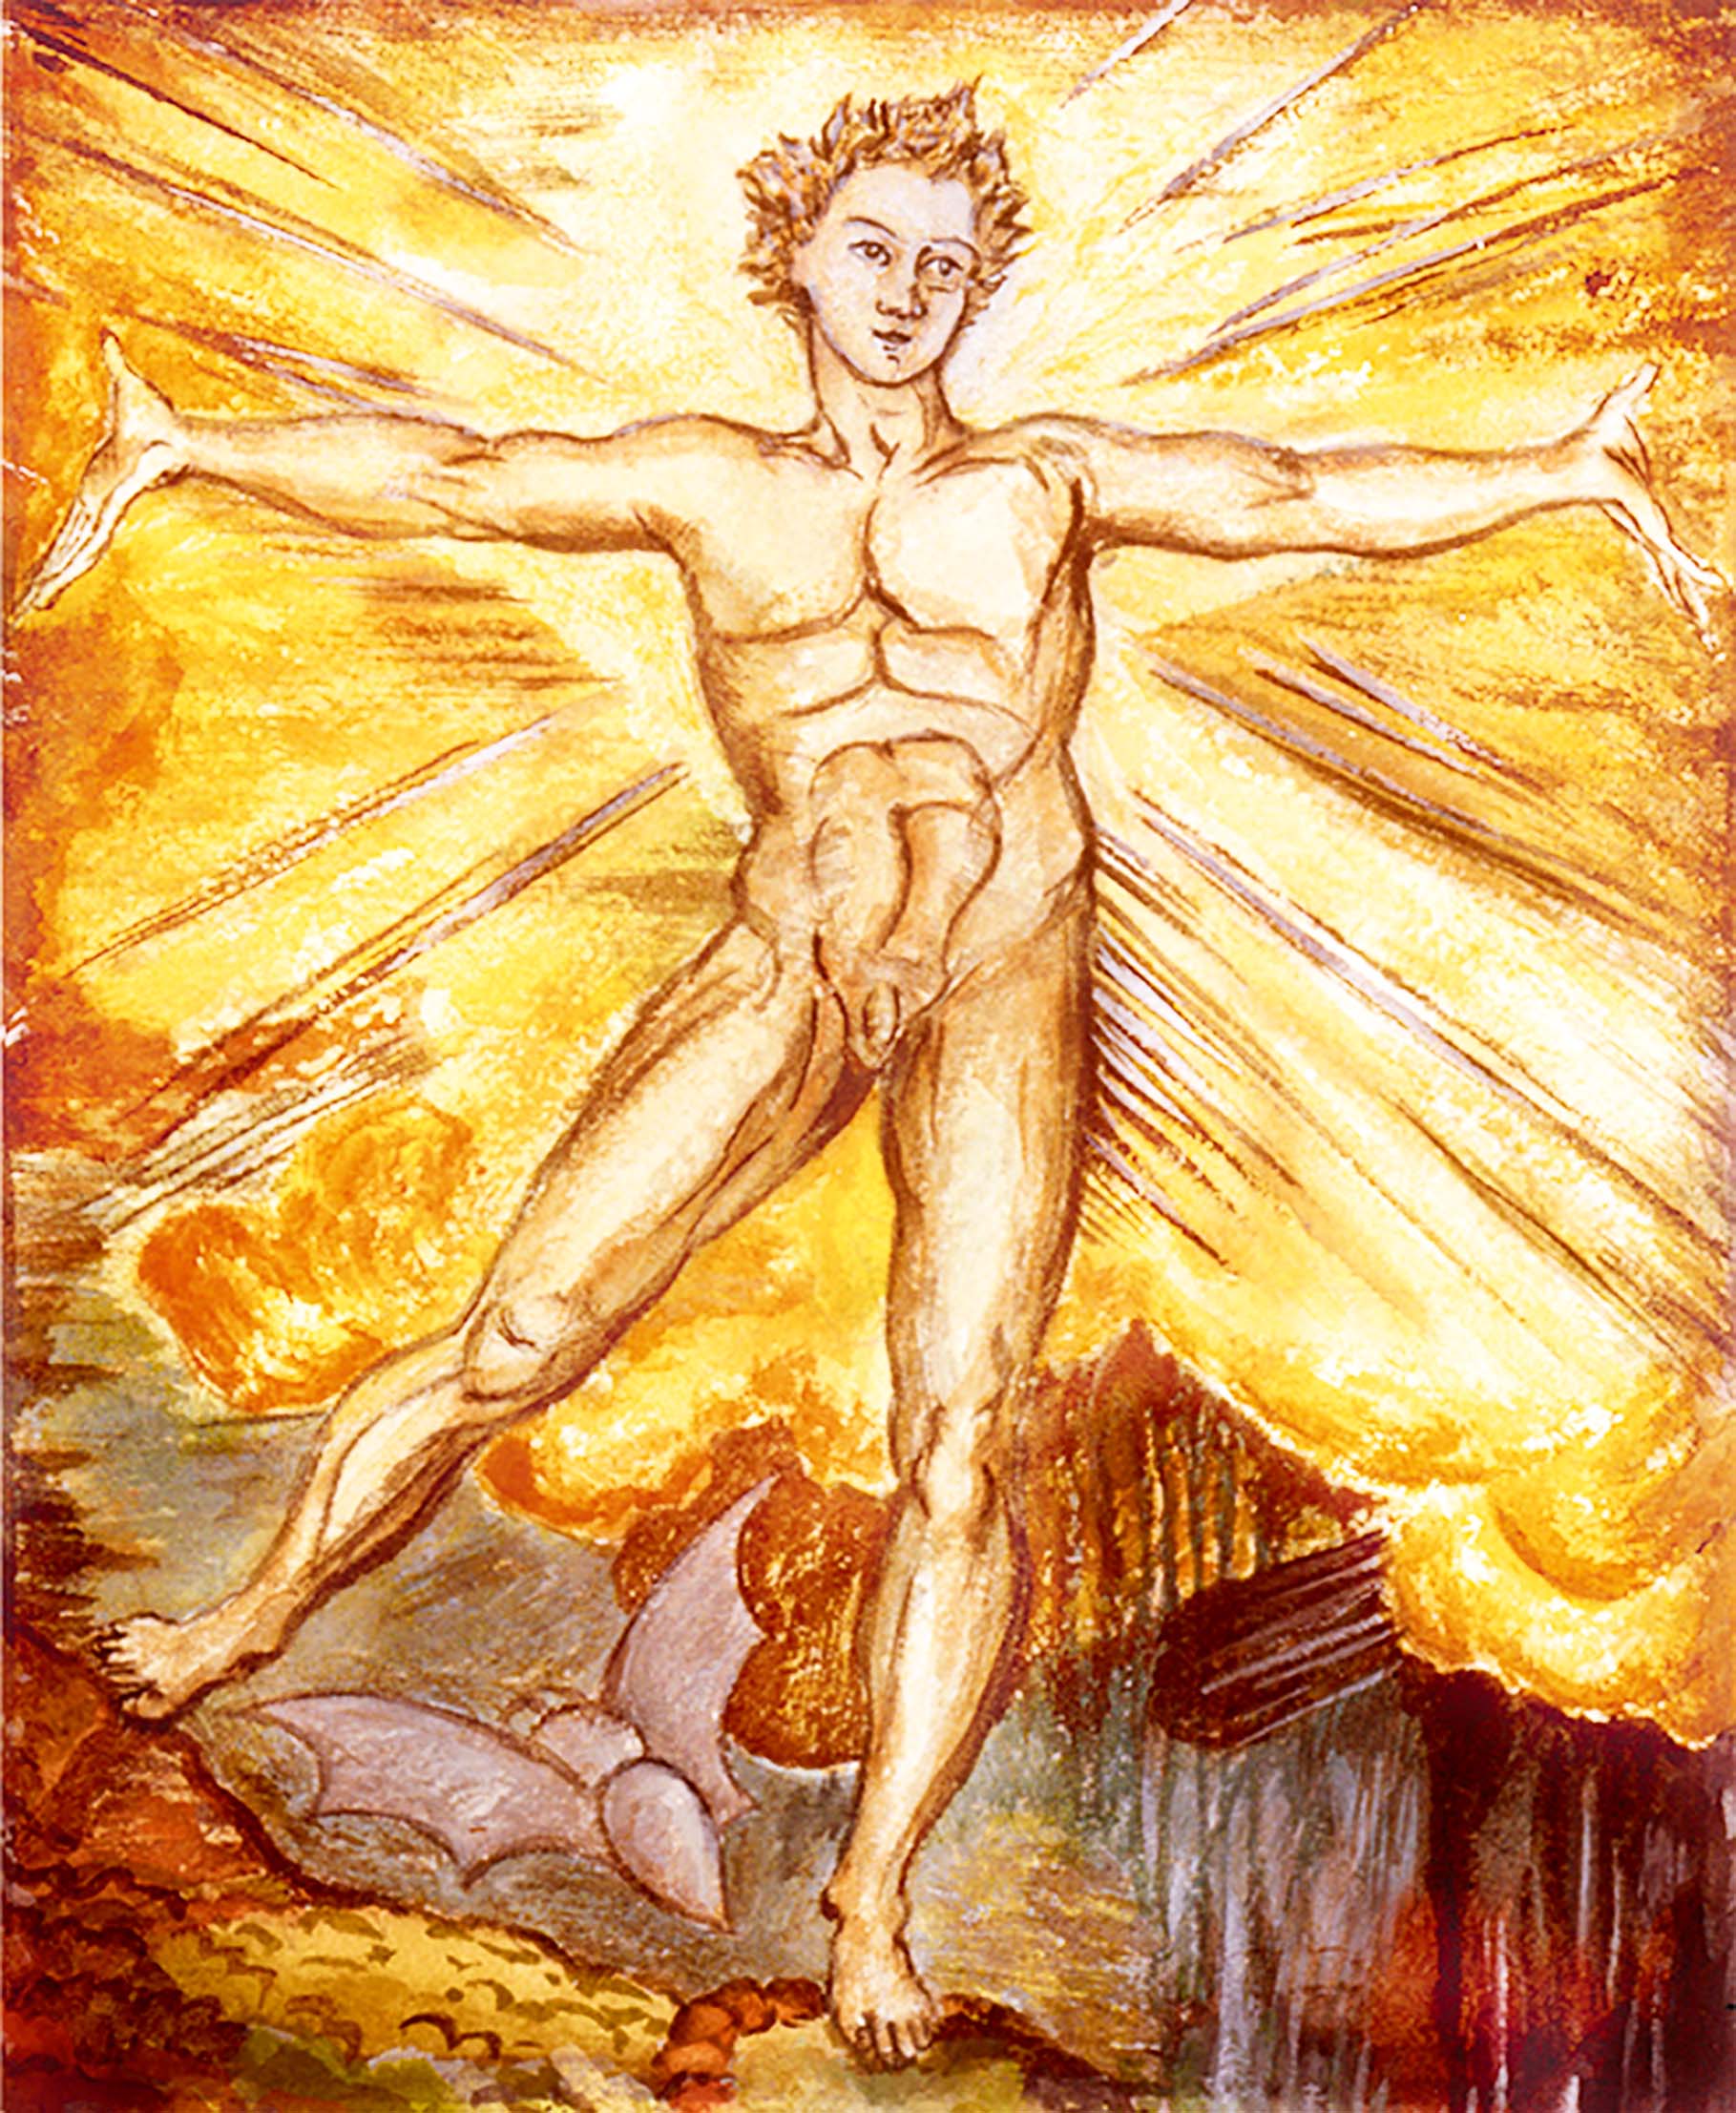 William Blake’s iconic images of 'Albion Arose'